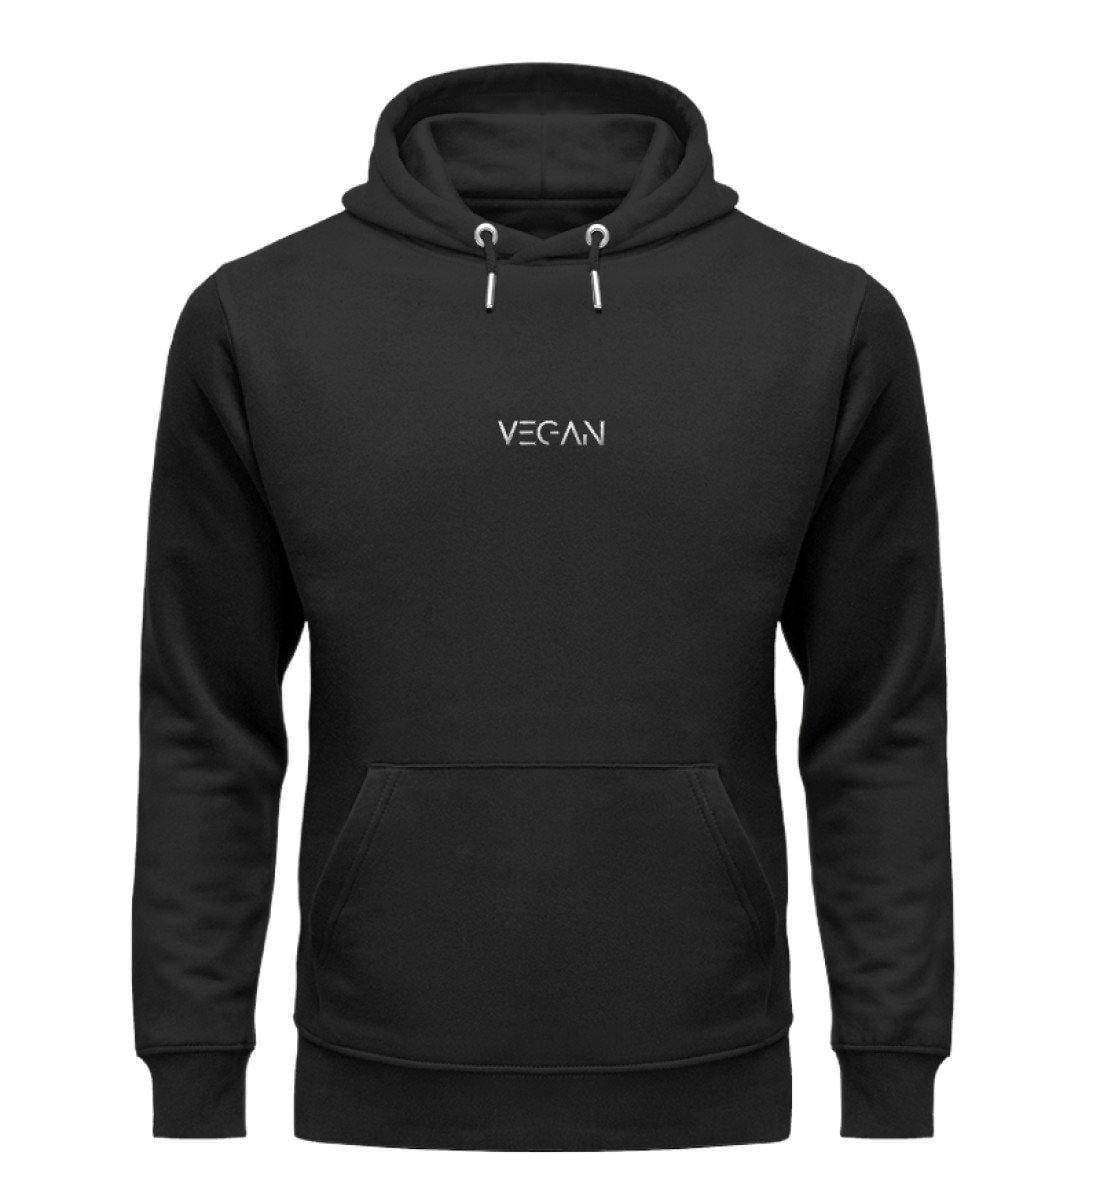 V E G A N - Unisex Premium Organic Hoodie mit Stick - Team Vegan © vegan t shirt